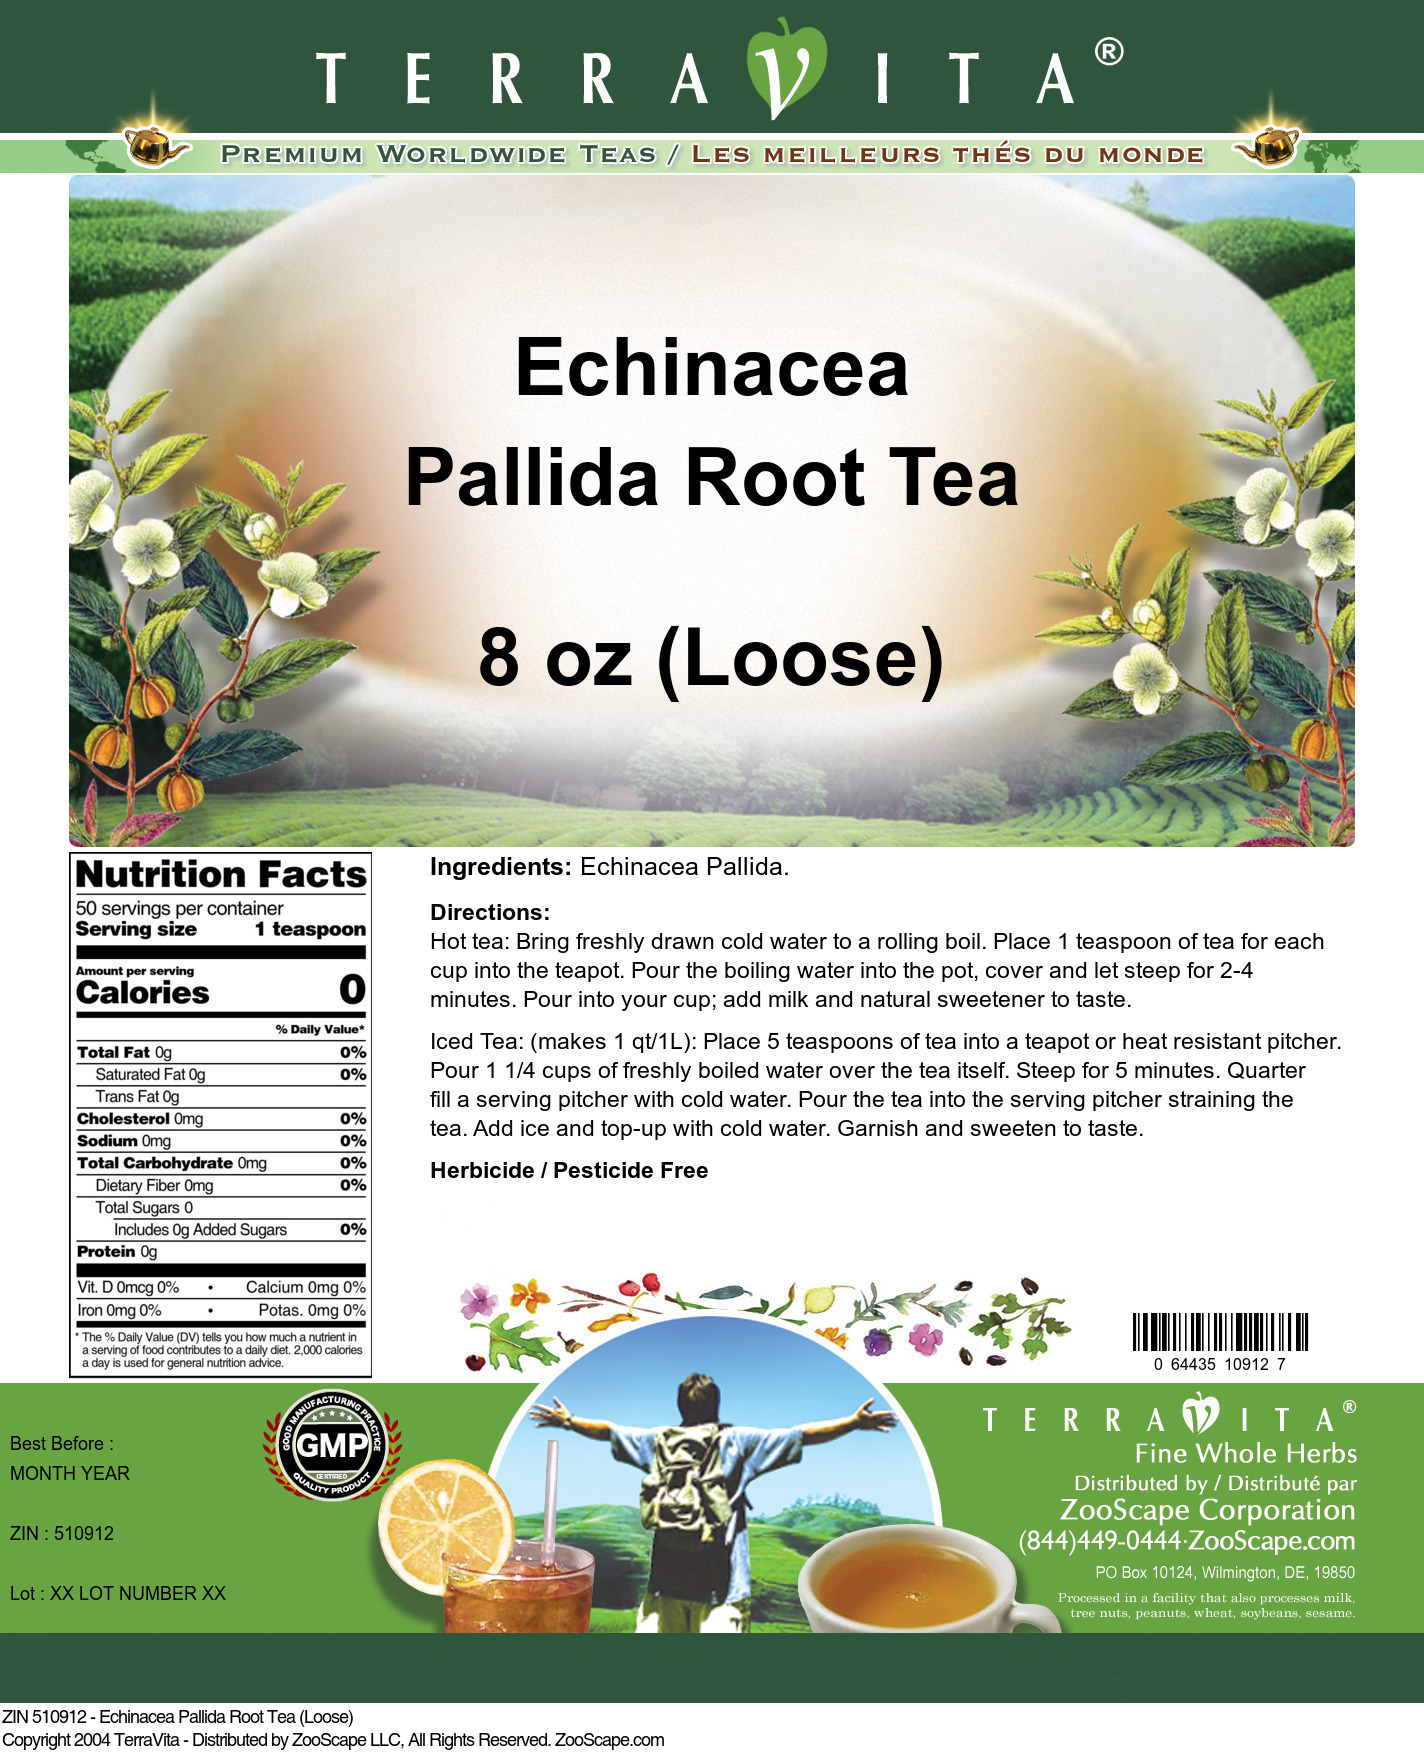 Echinacea Pallida Root Tea (Loose) - Label